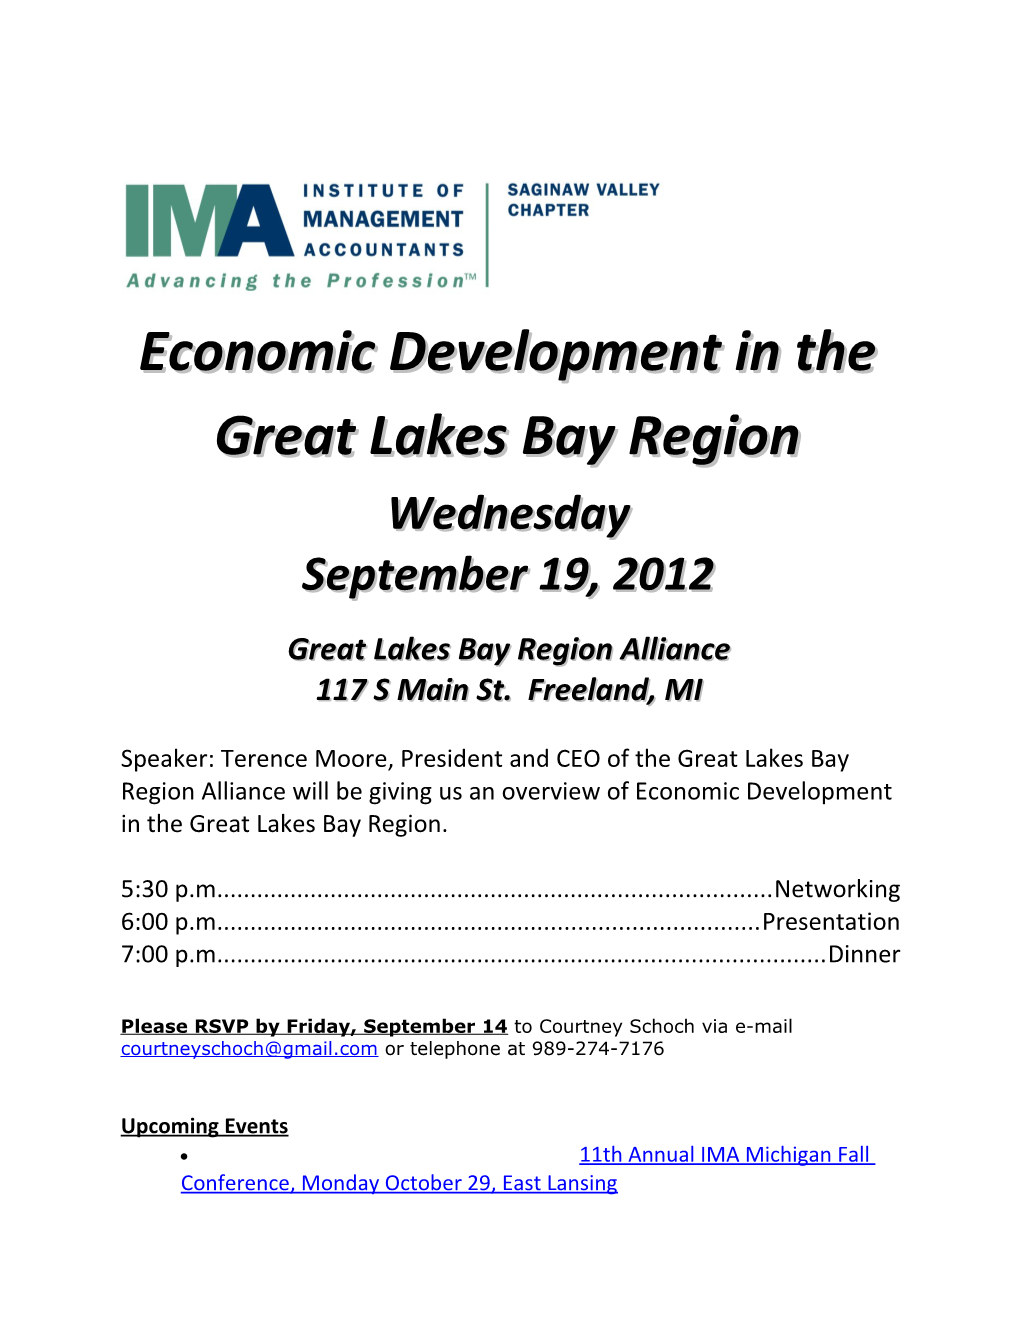 Economic Development in the Great Lakes Bay Region